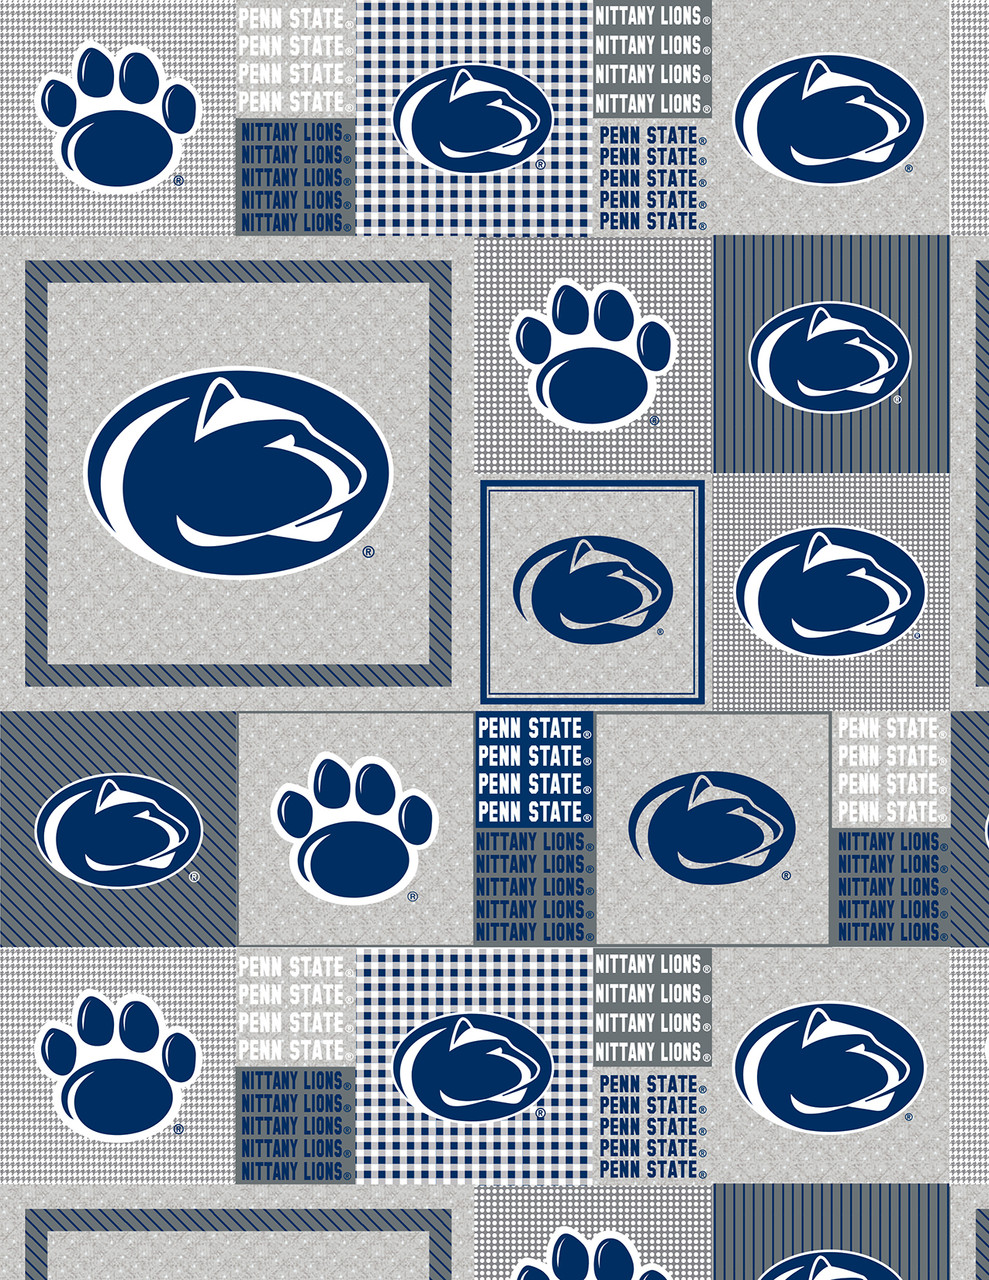 Penn State Nittany Lions Grey Block Fleece Fabric Remnants